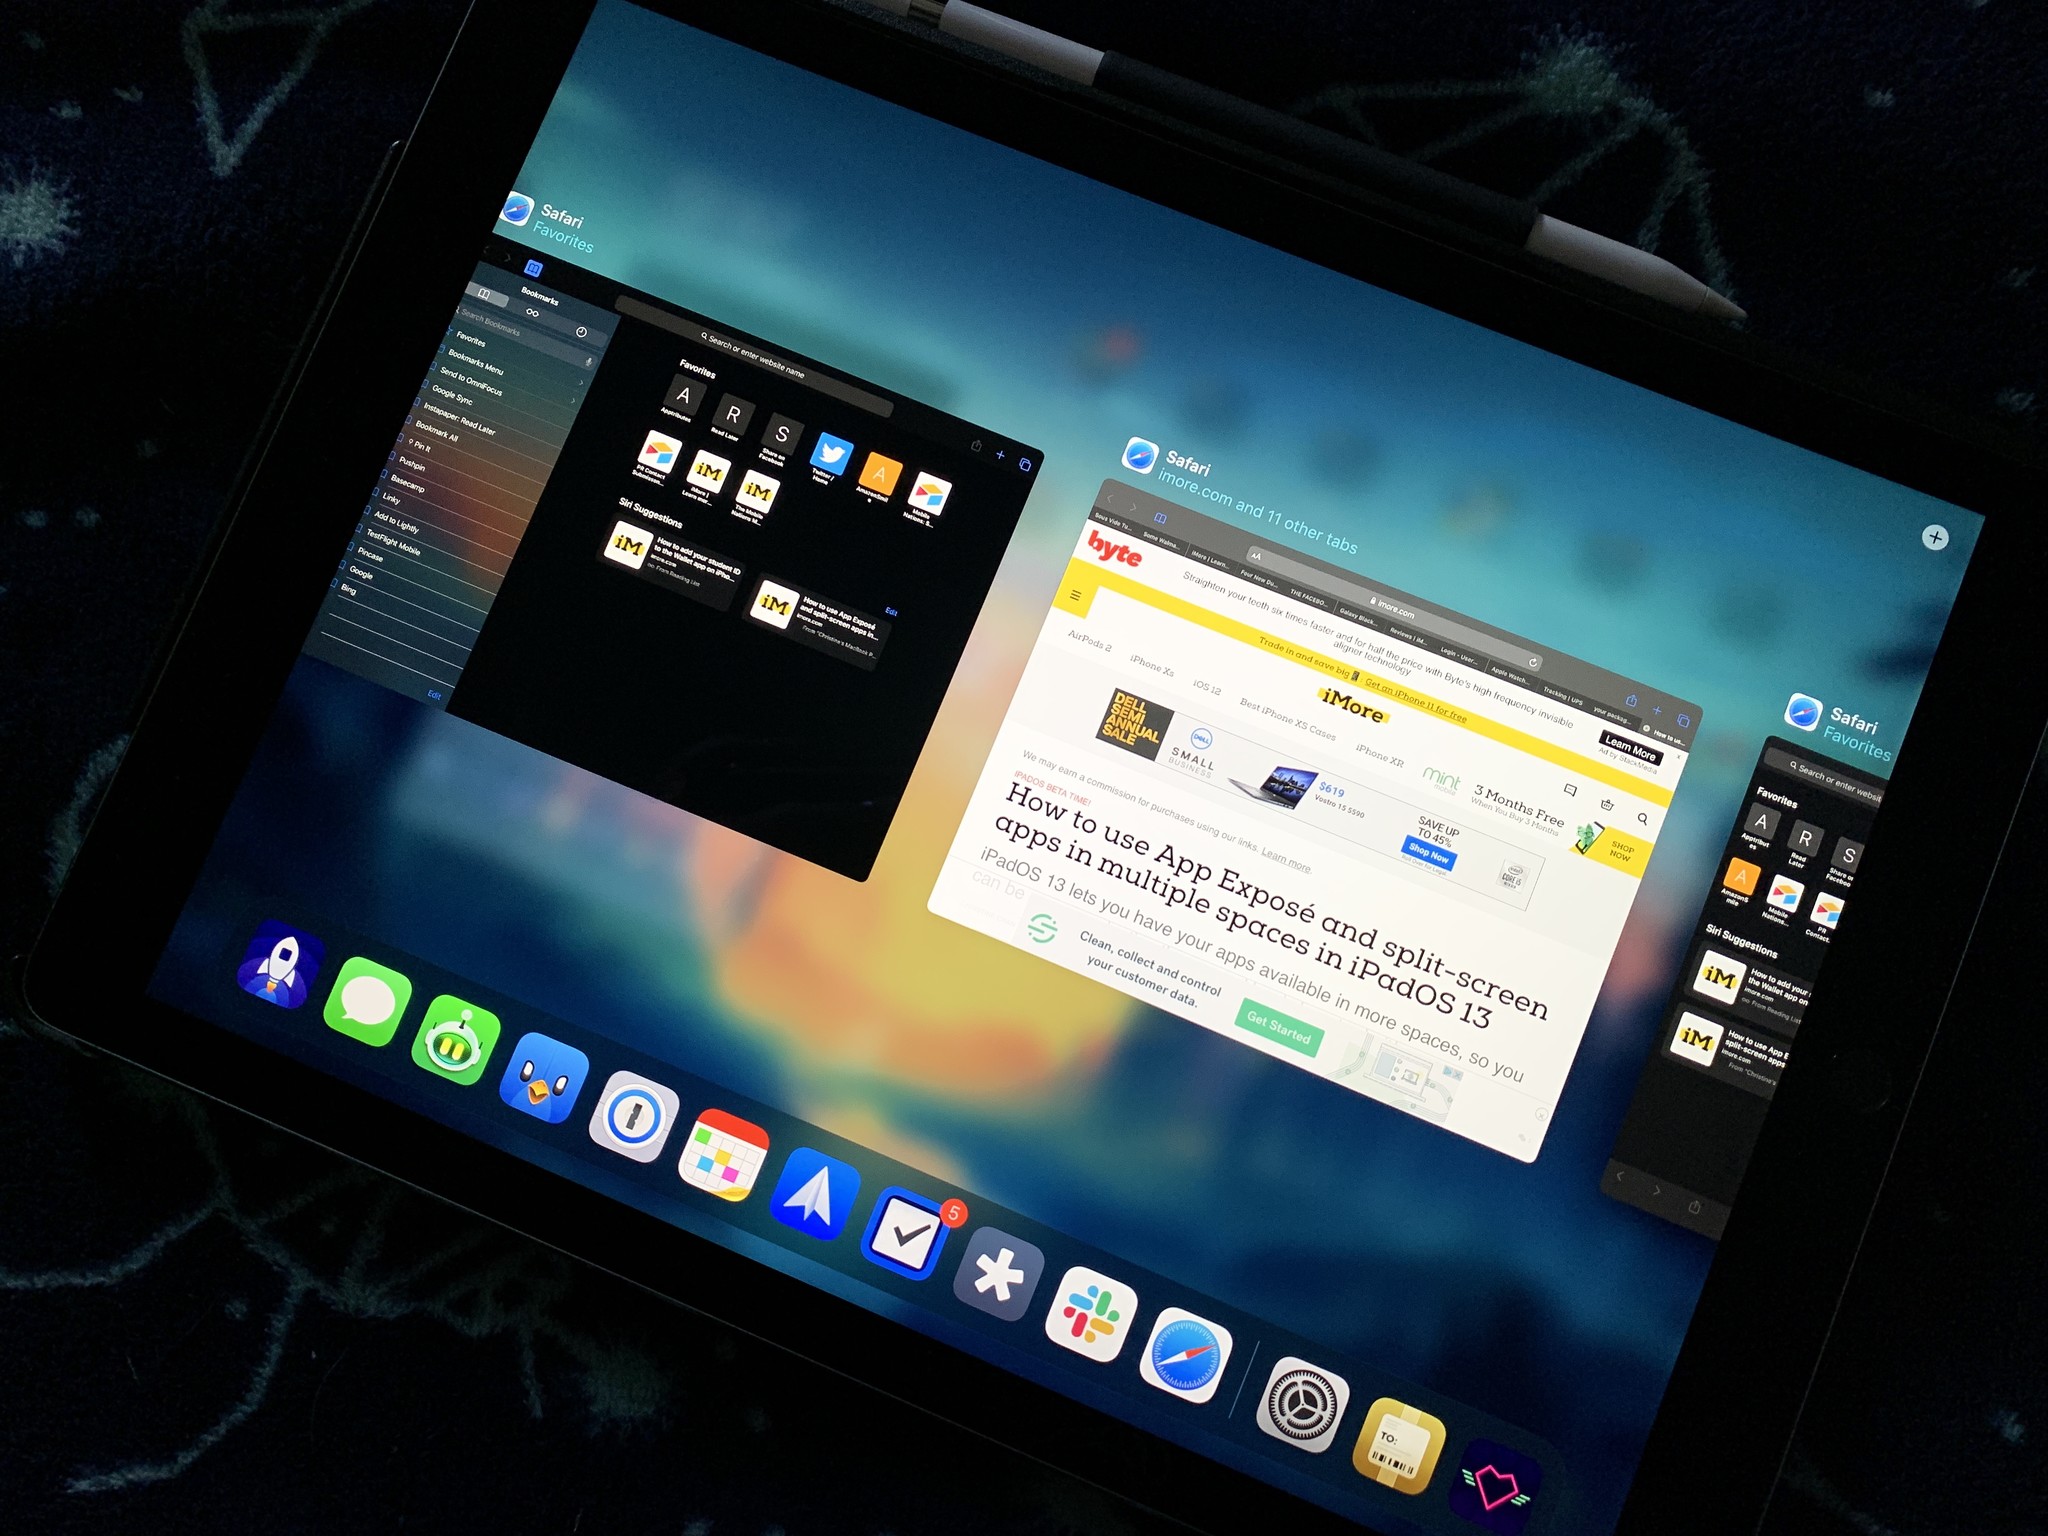 iPad Pro 12.9 with App Exposé